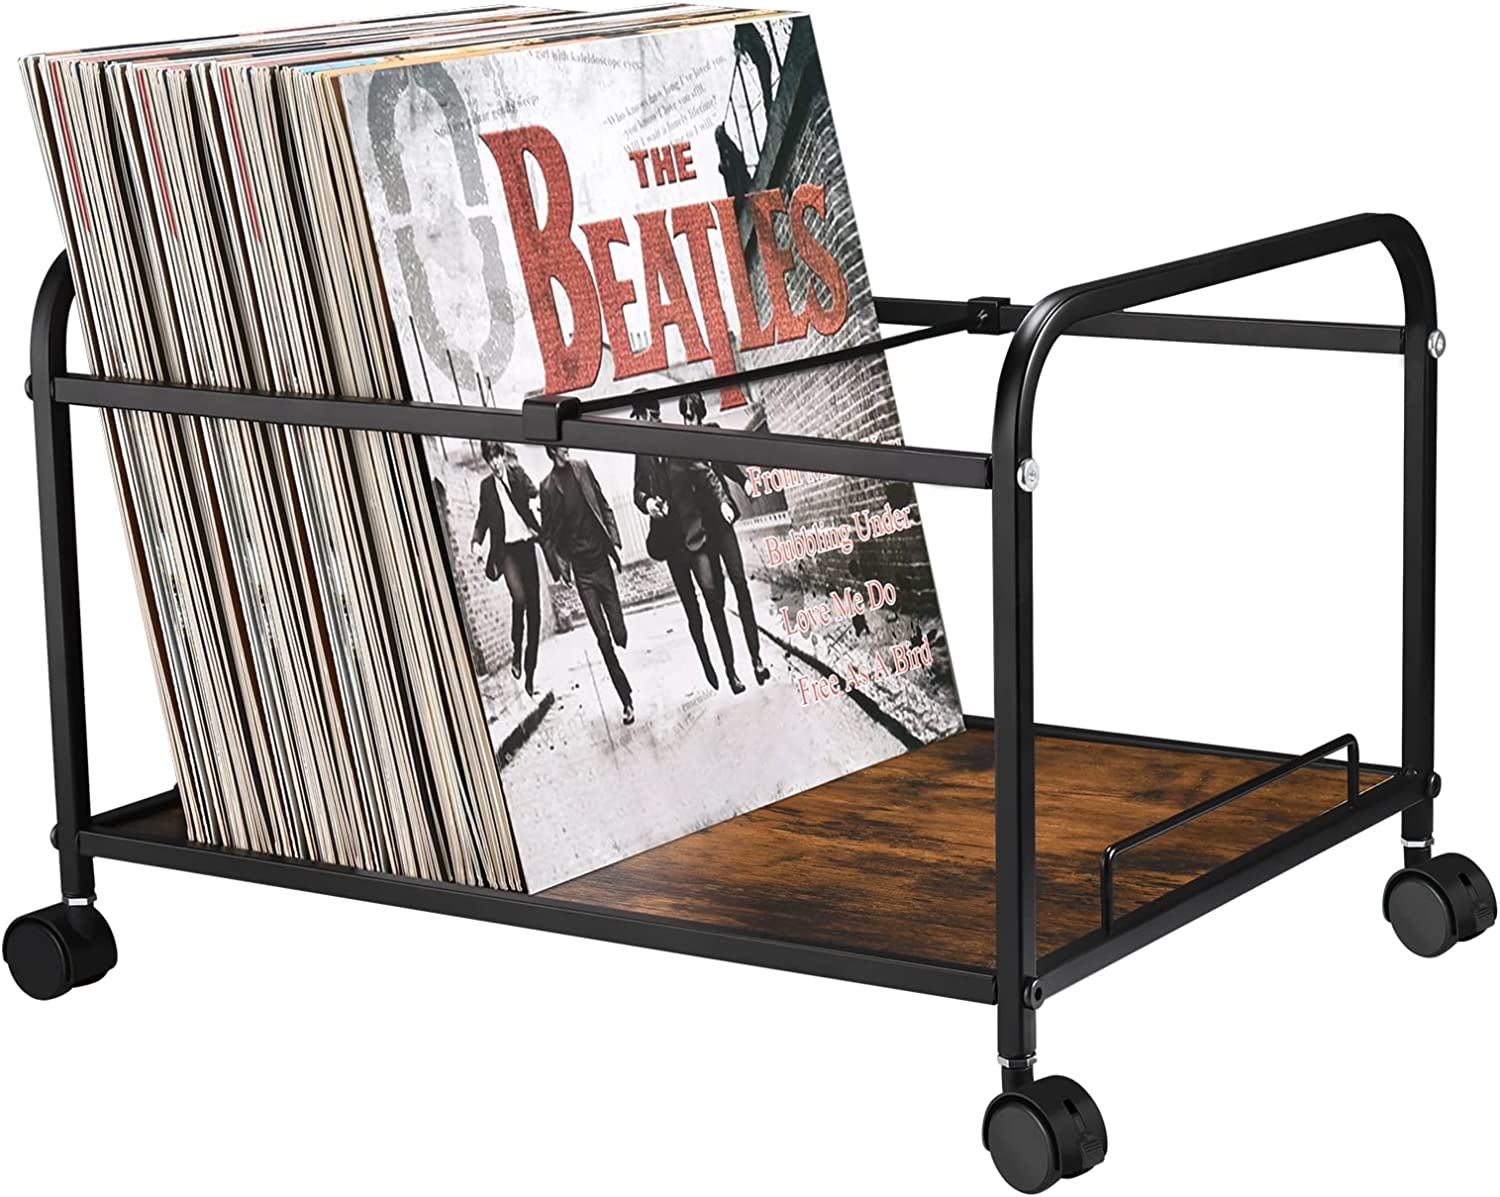 DACK Vinyl Record Storage Crate with Wheels,Black Metal LP Storage Holder Up to 80 LP Storage,Record Organizer Box for Albums